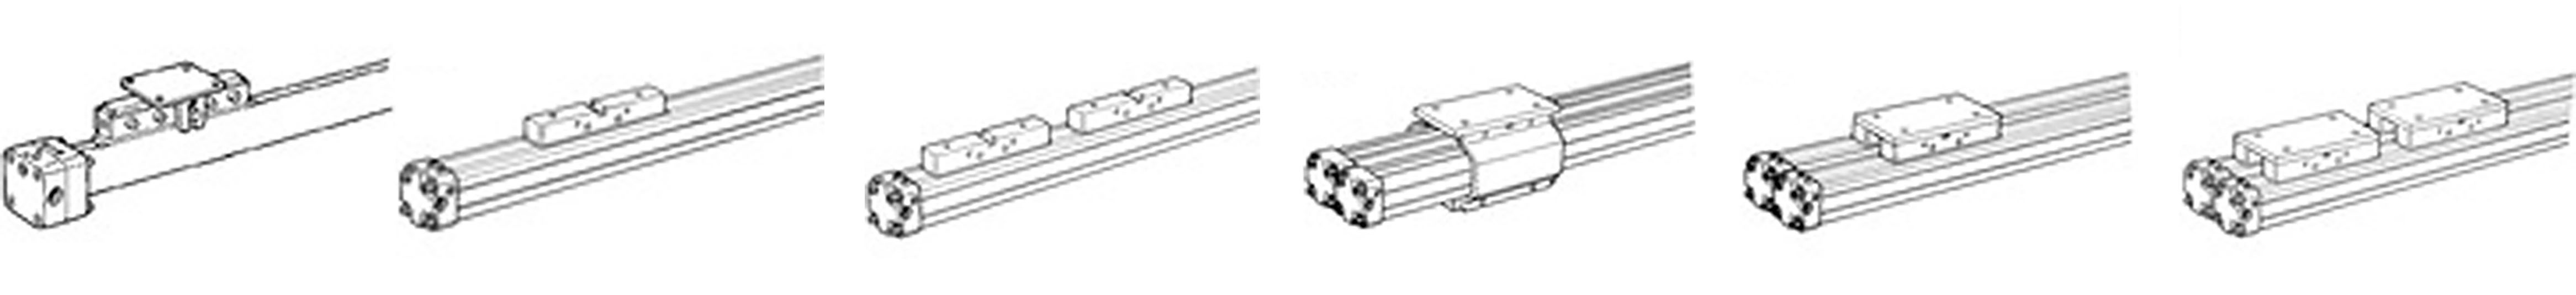 pneumatic-linear-actuators-family-photo